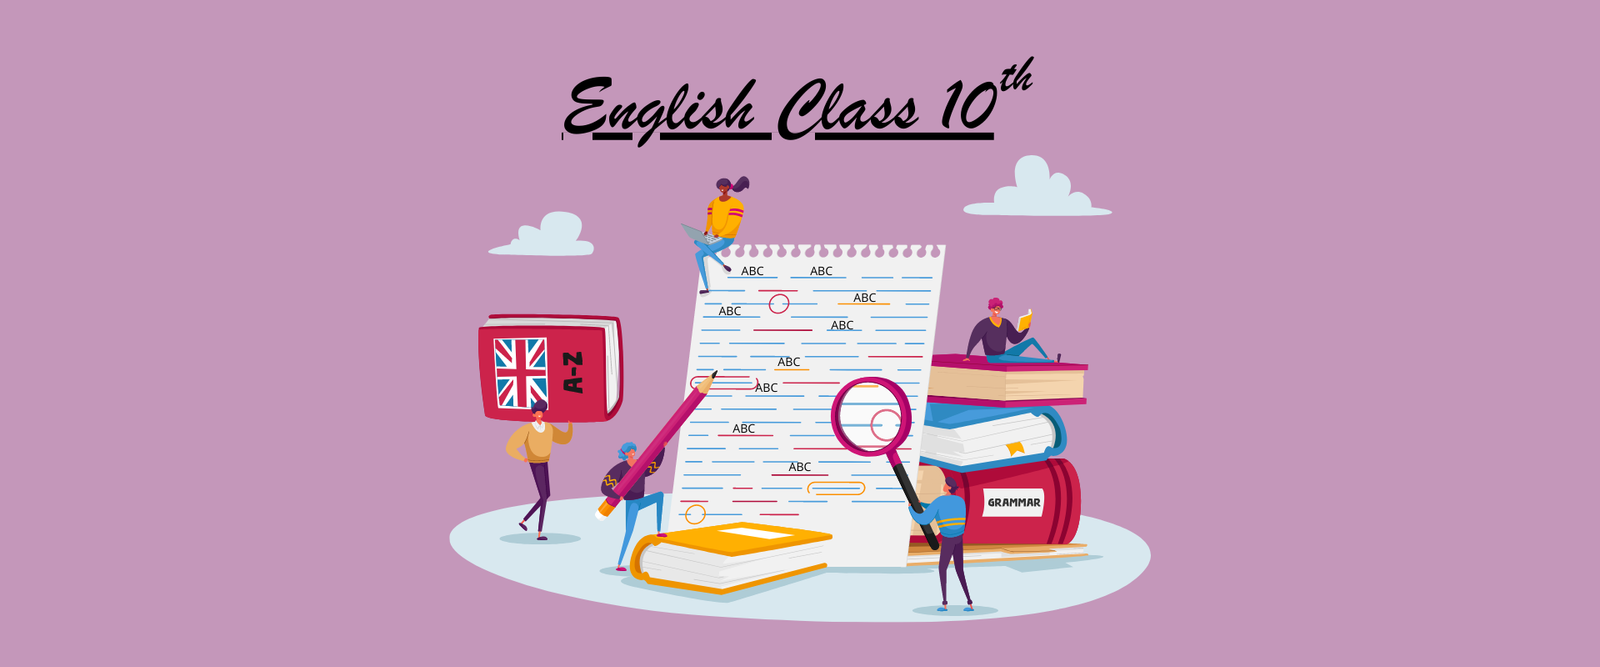 English Class 10